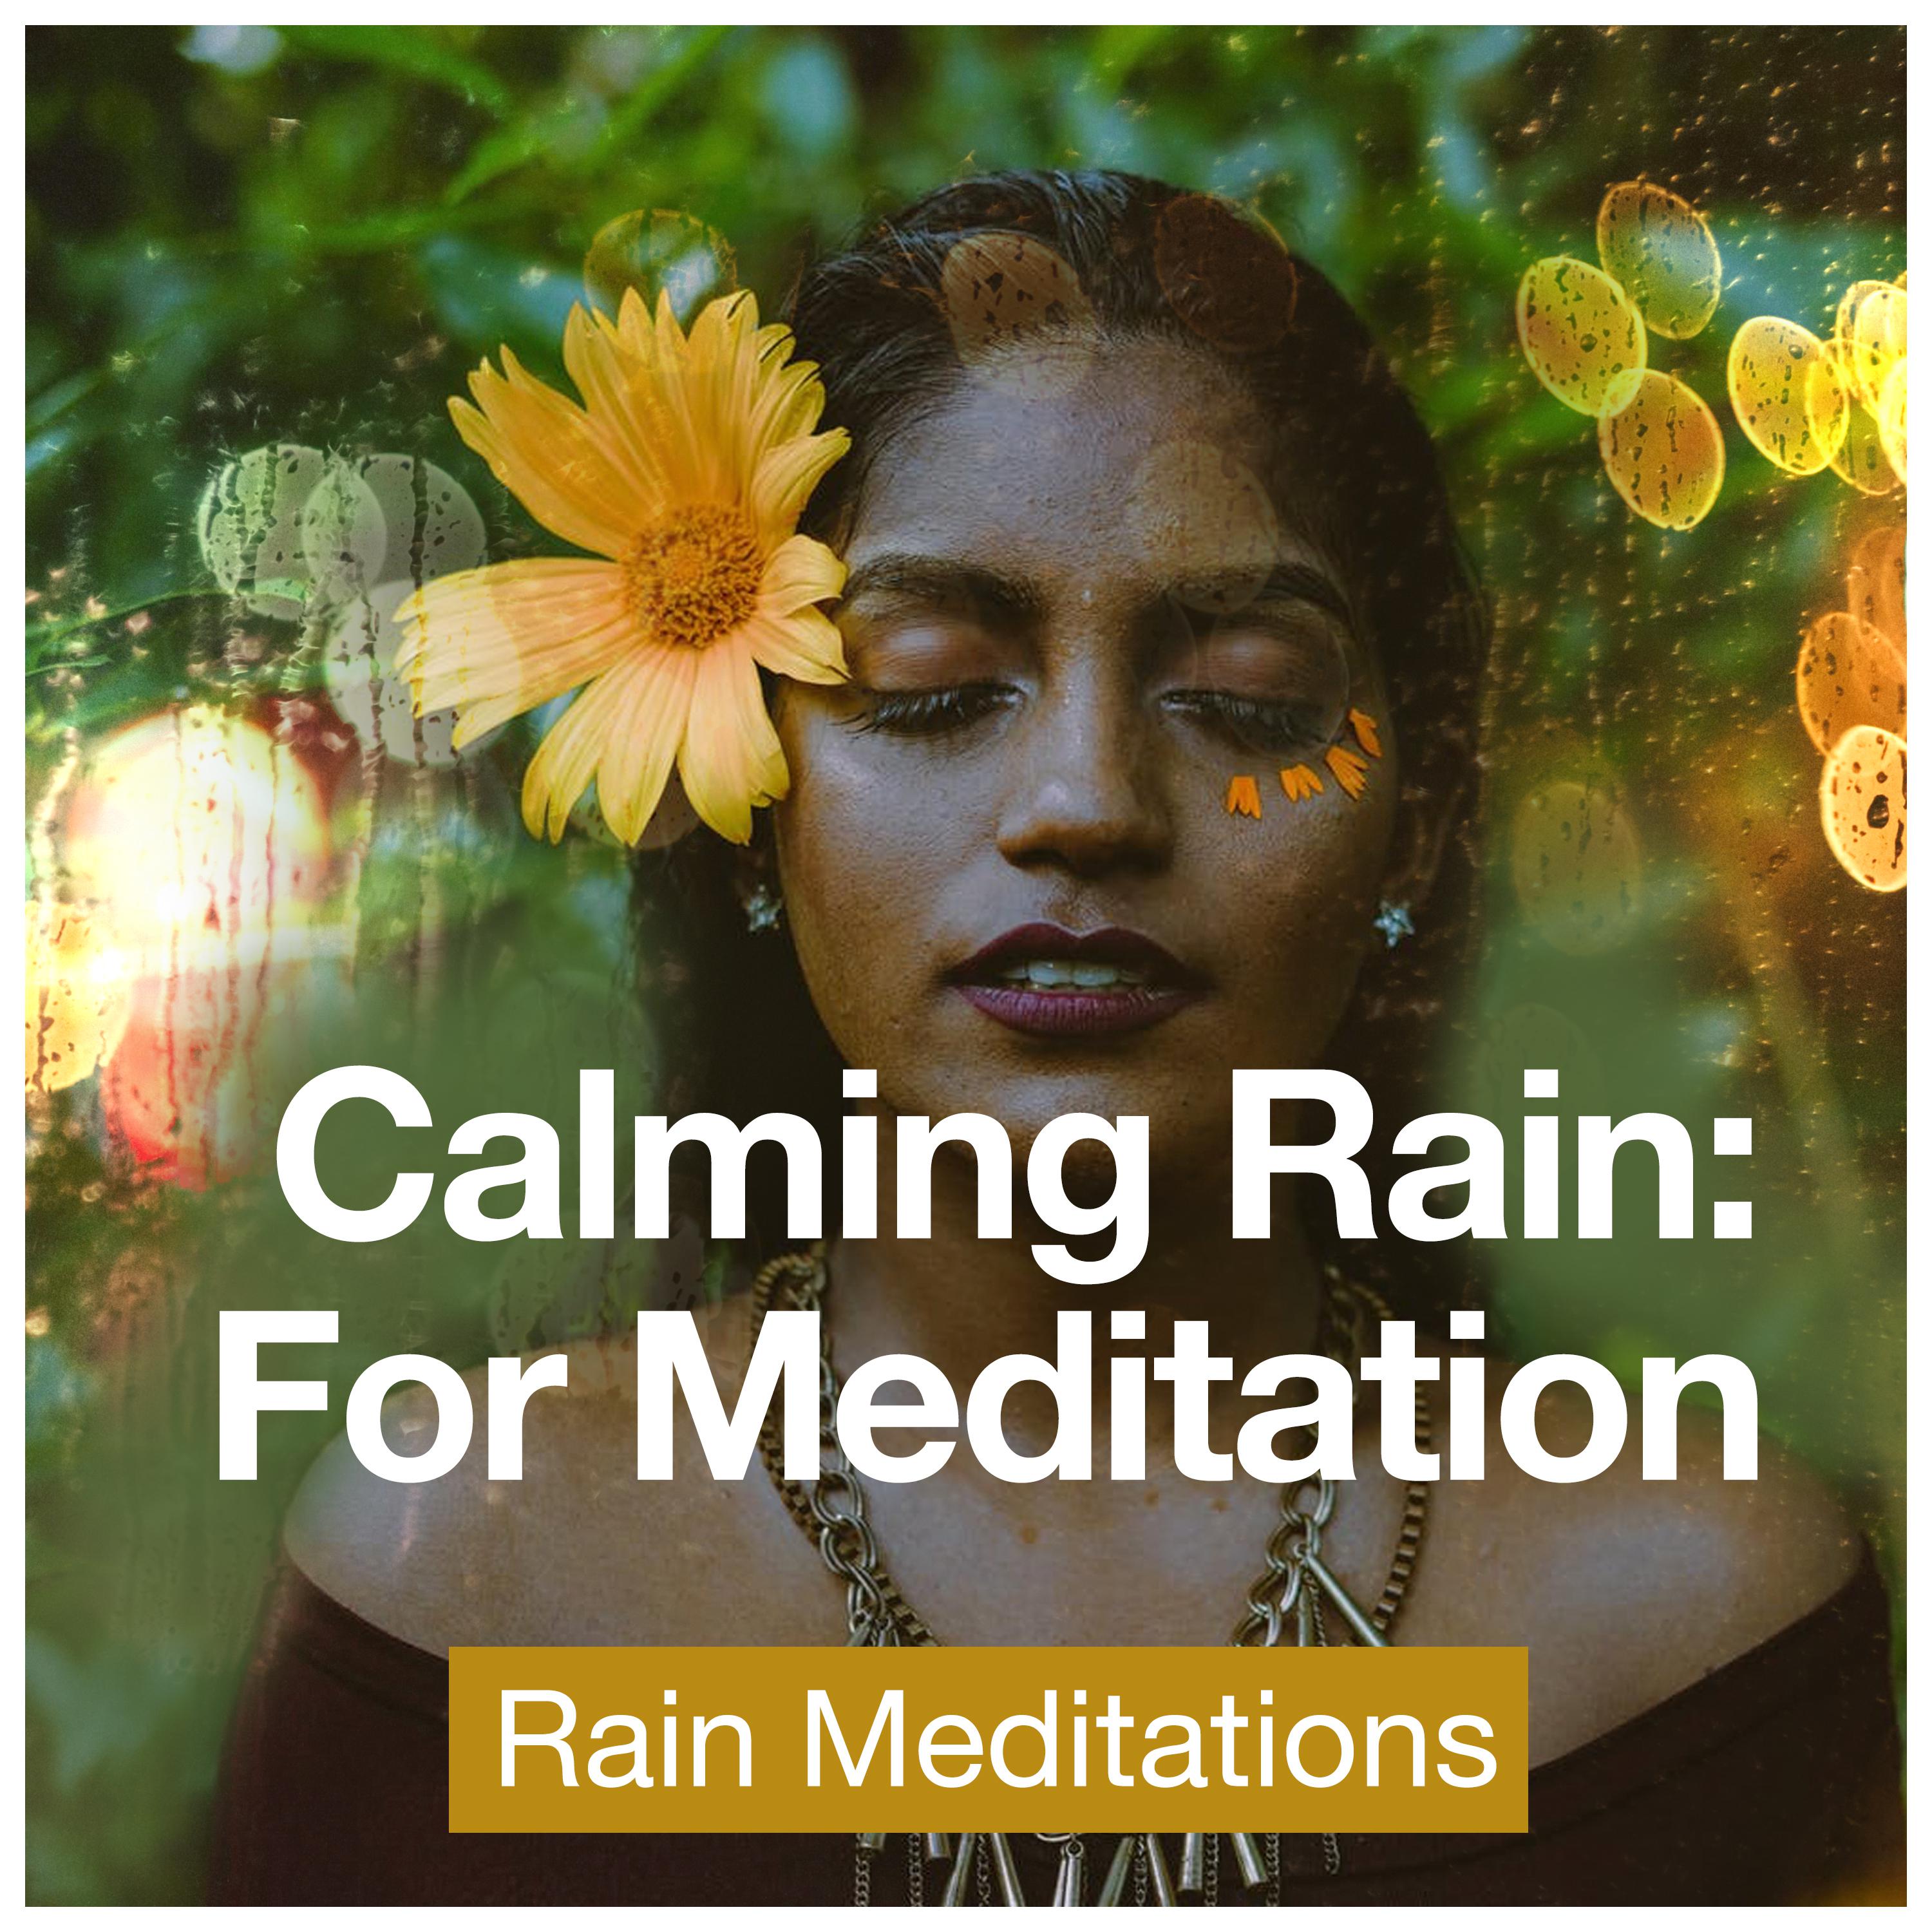 Rain Meditations - The Downpour Outside